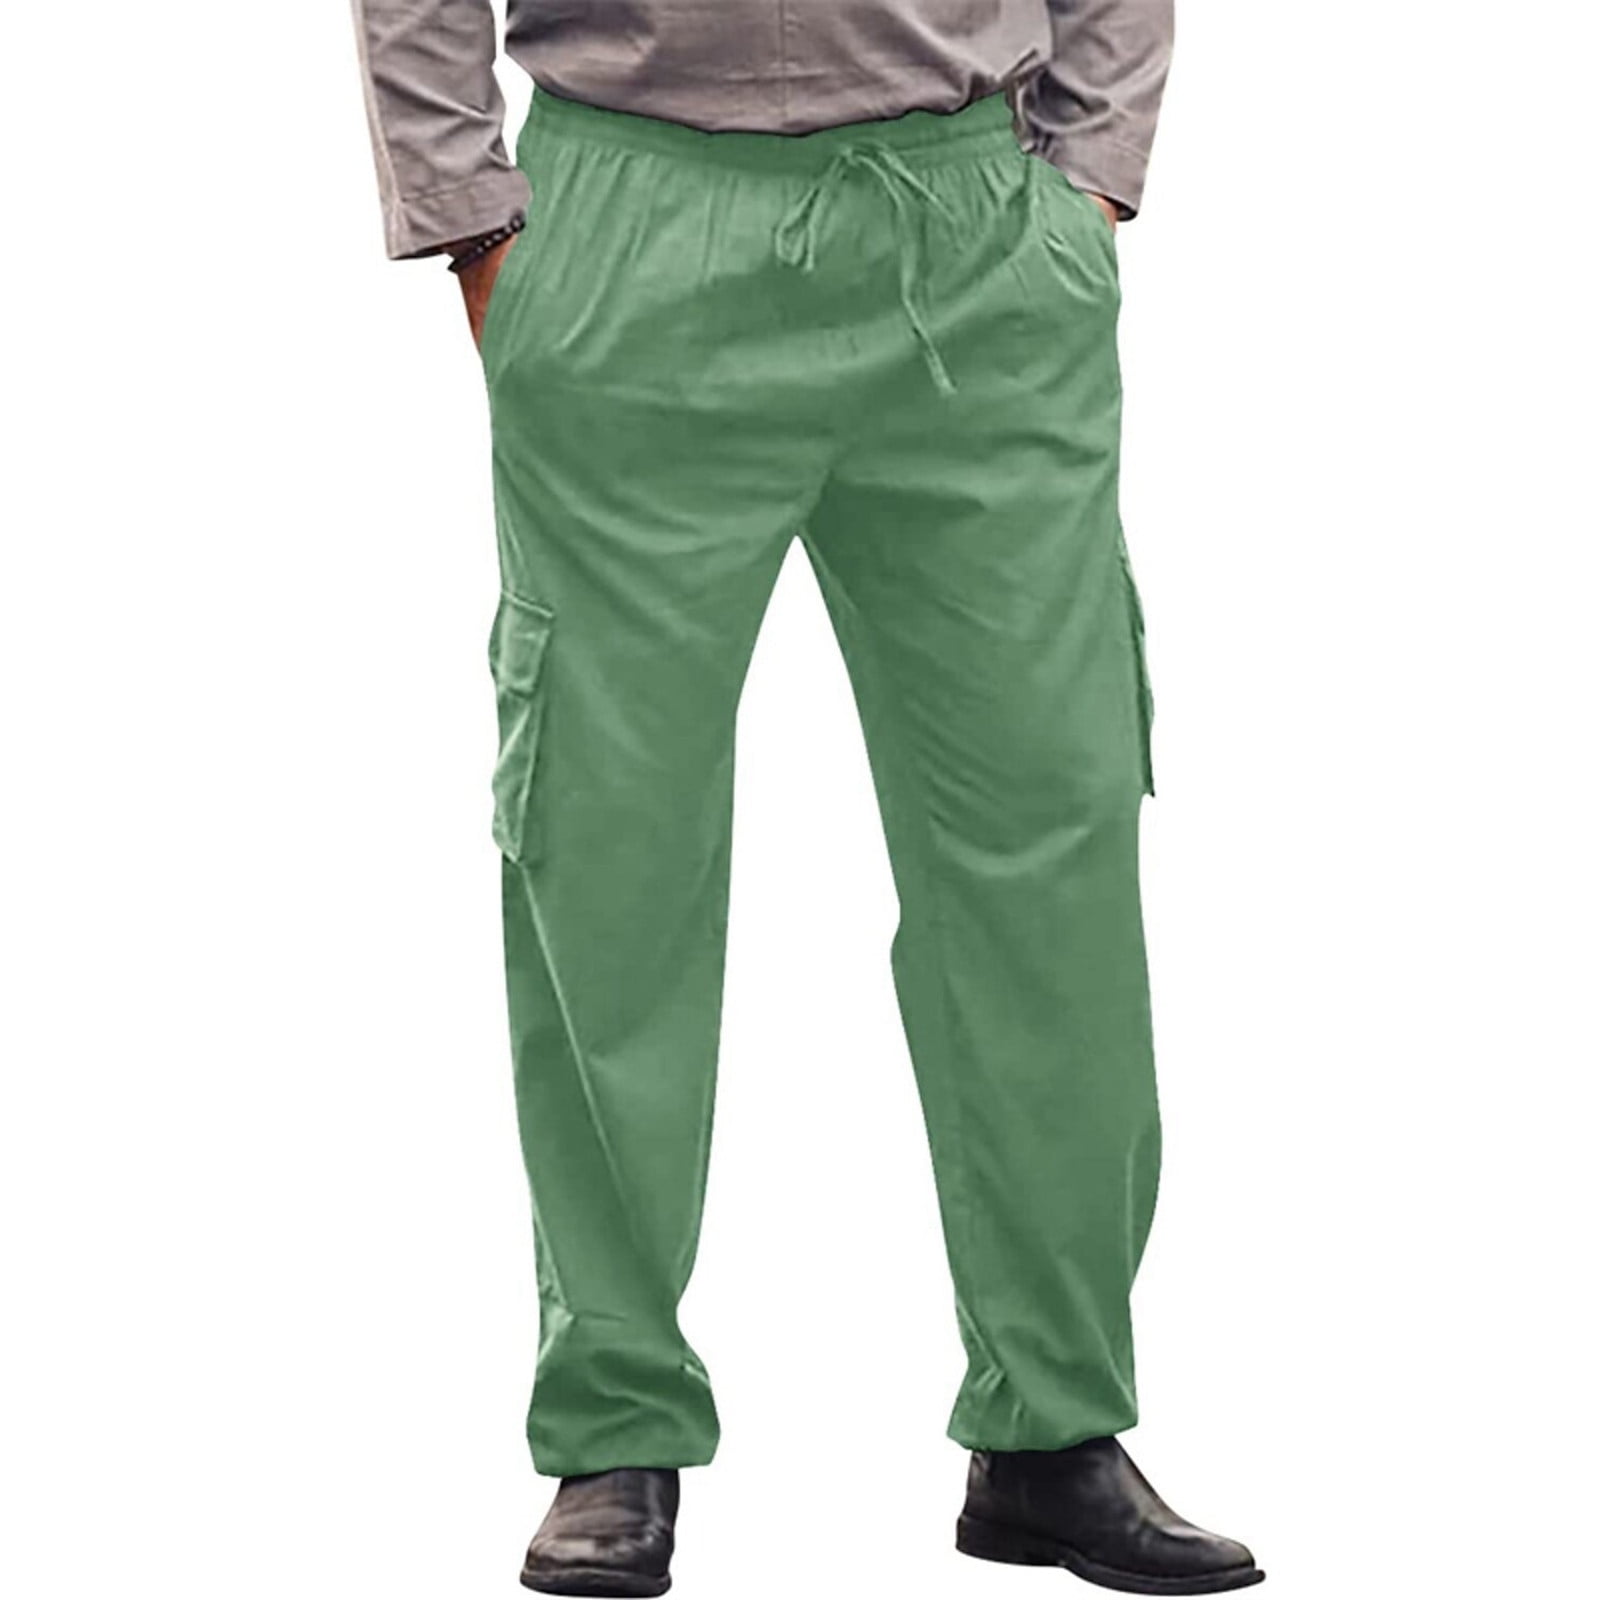 PMUYBHF Male Cargo Sweatpants for Men Big & Tall 4Xl Mens Cotton